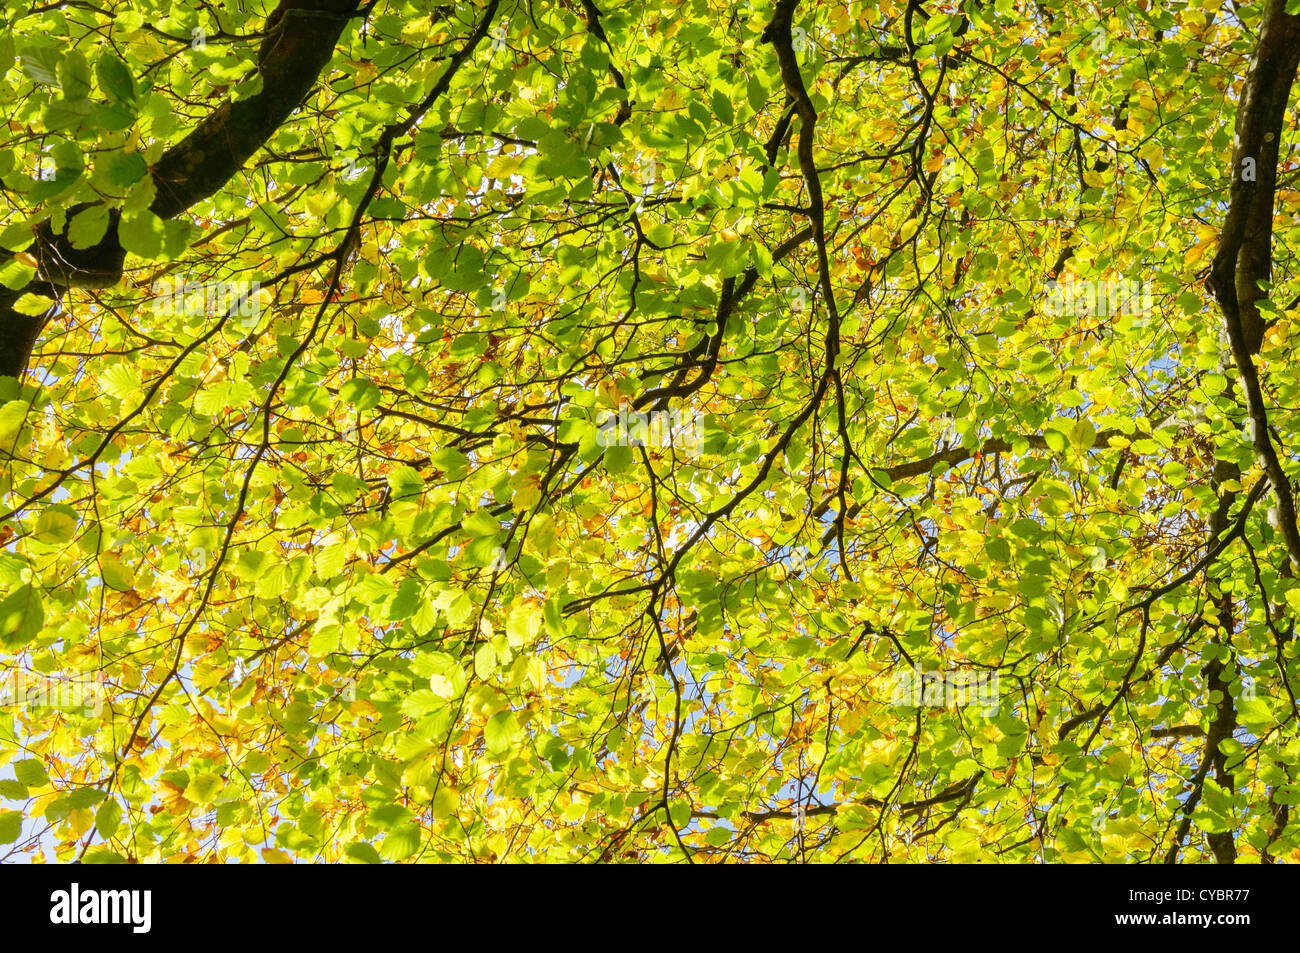 Sunlight dappling through leaves on trees Stock Photo